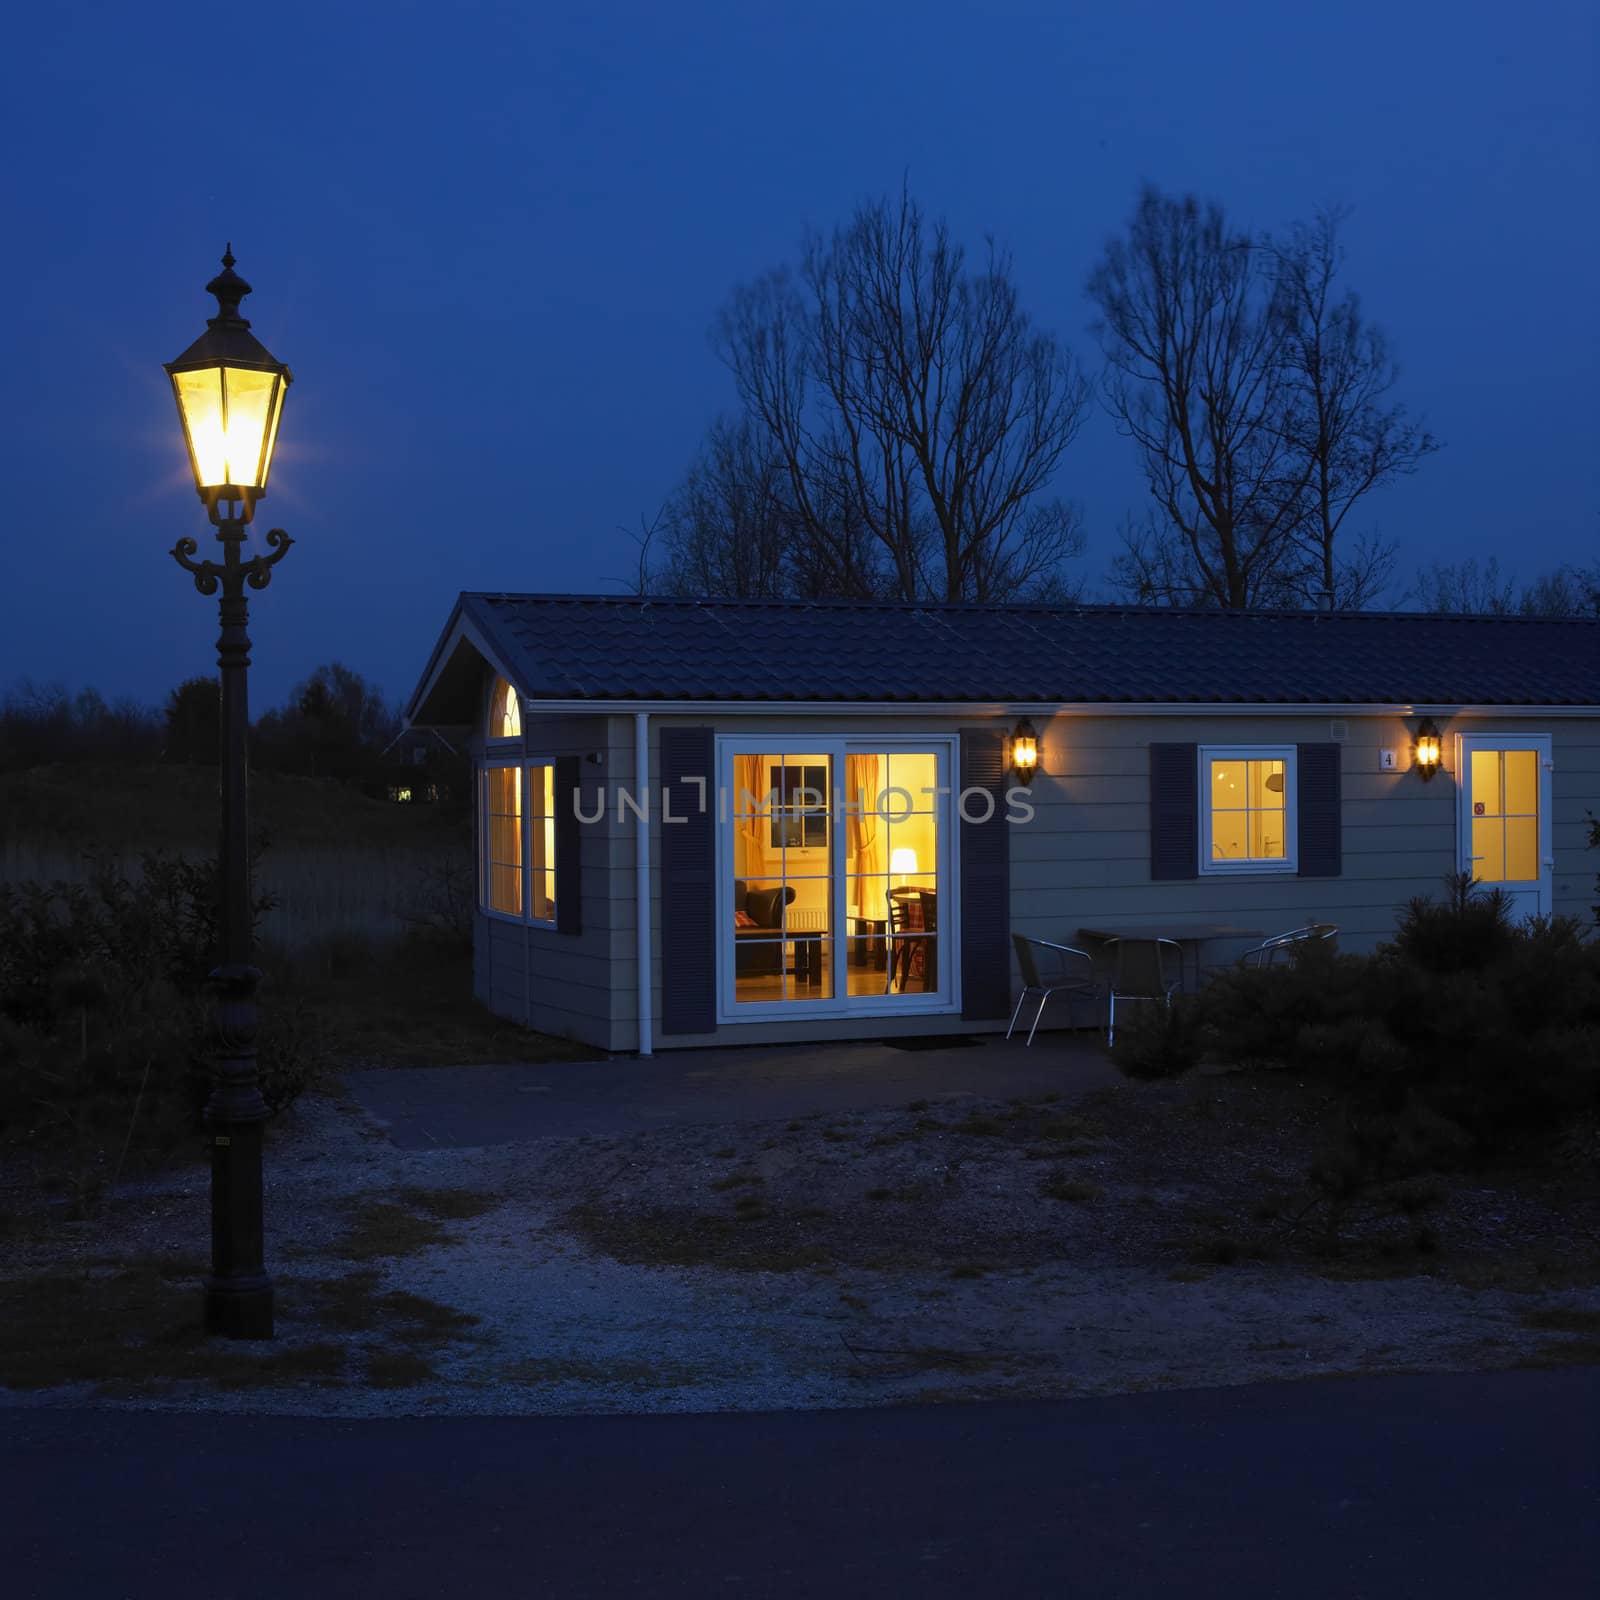 bungalow, De Cocksdorp, Texel Island, Netherlands by phbcz